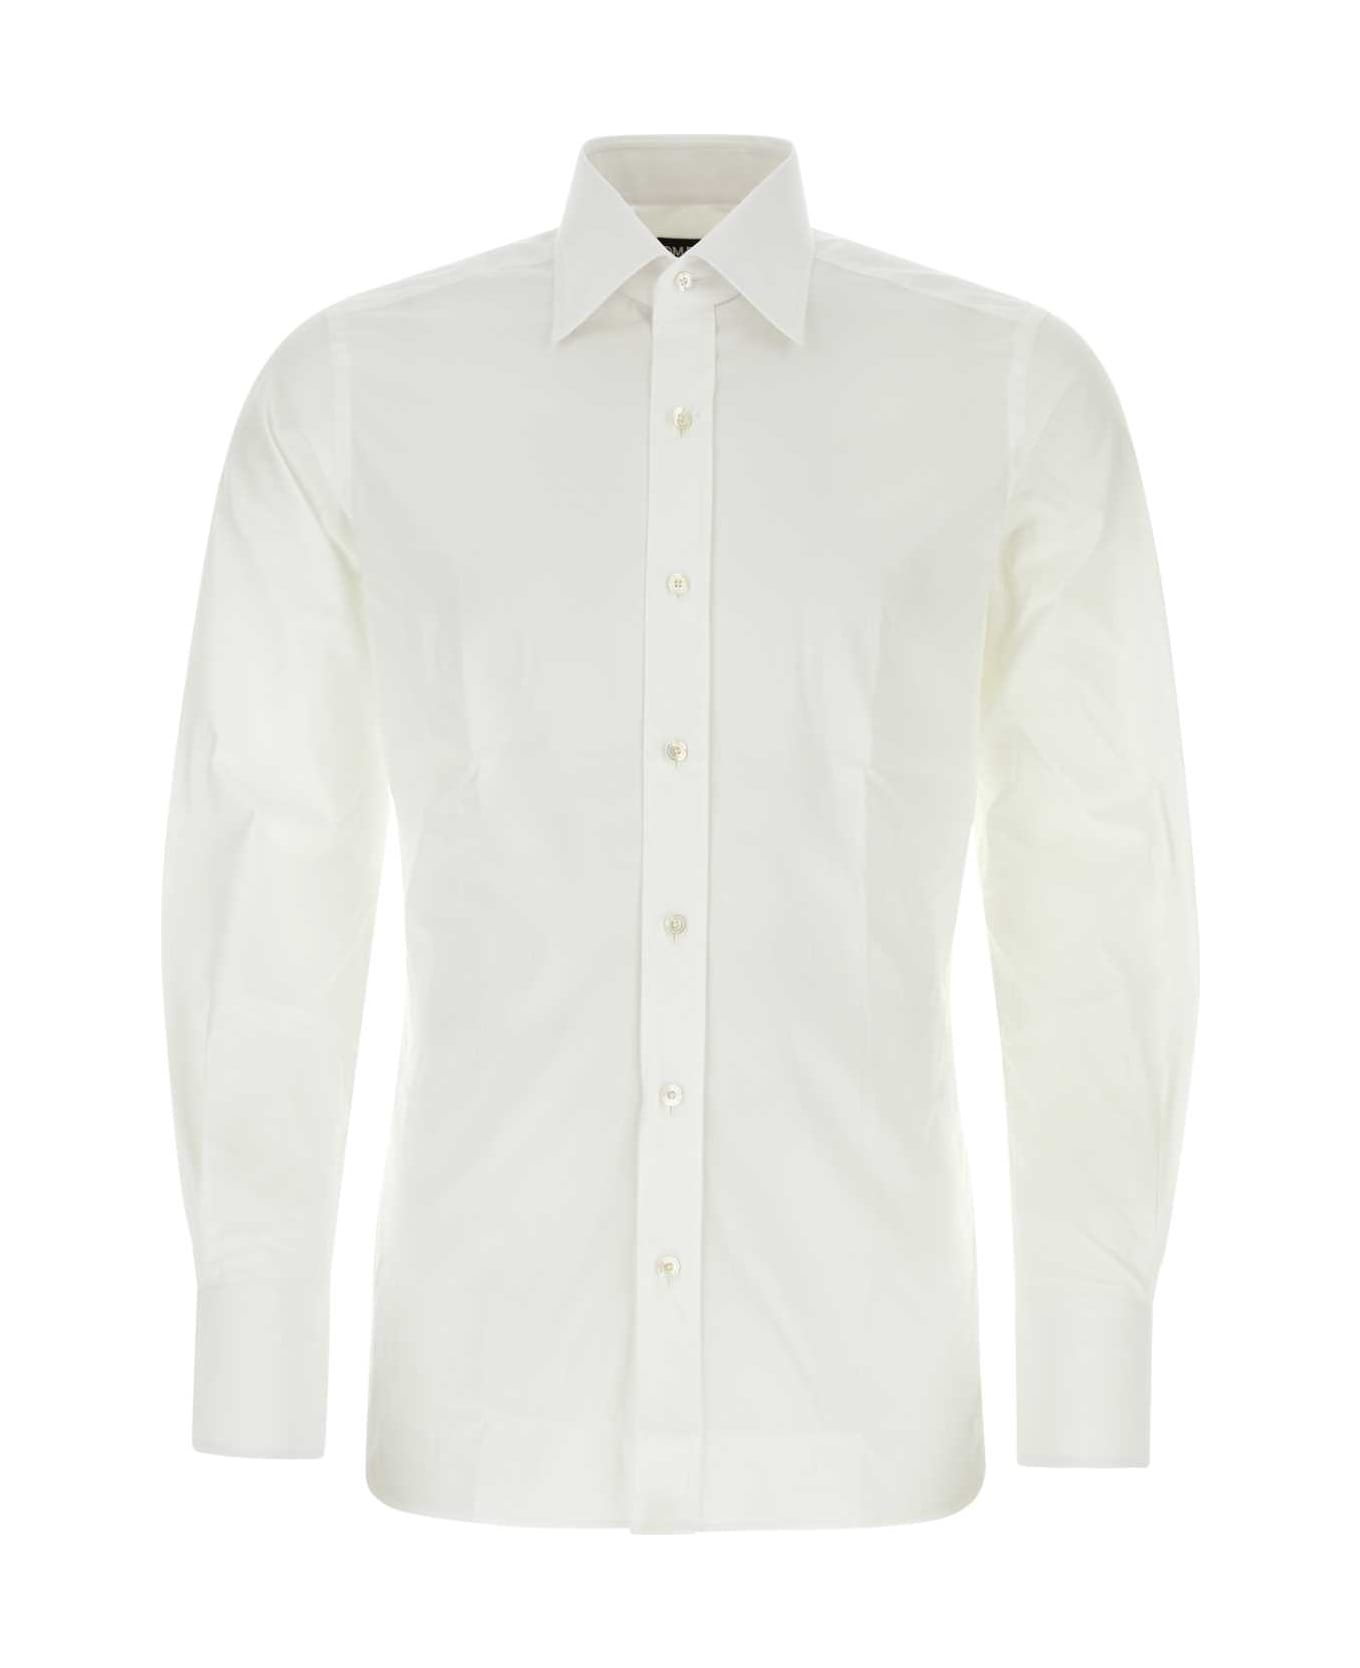 Tom Ford White Poplin Shirt - OPTICALWHITE